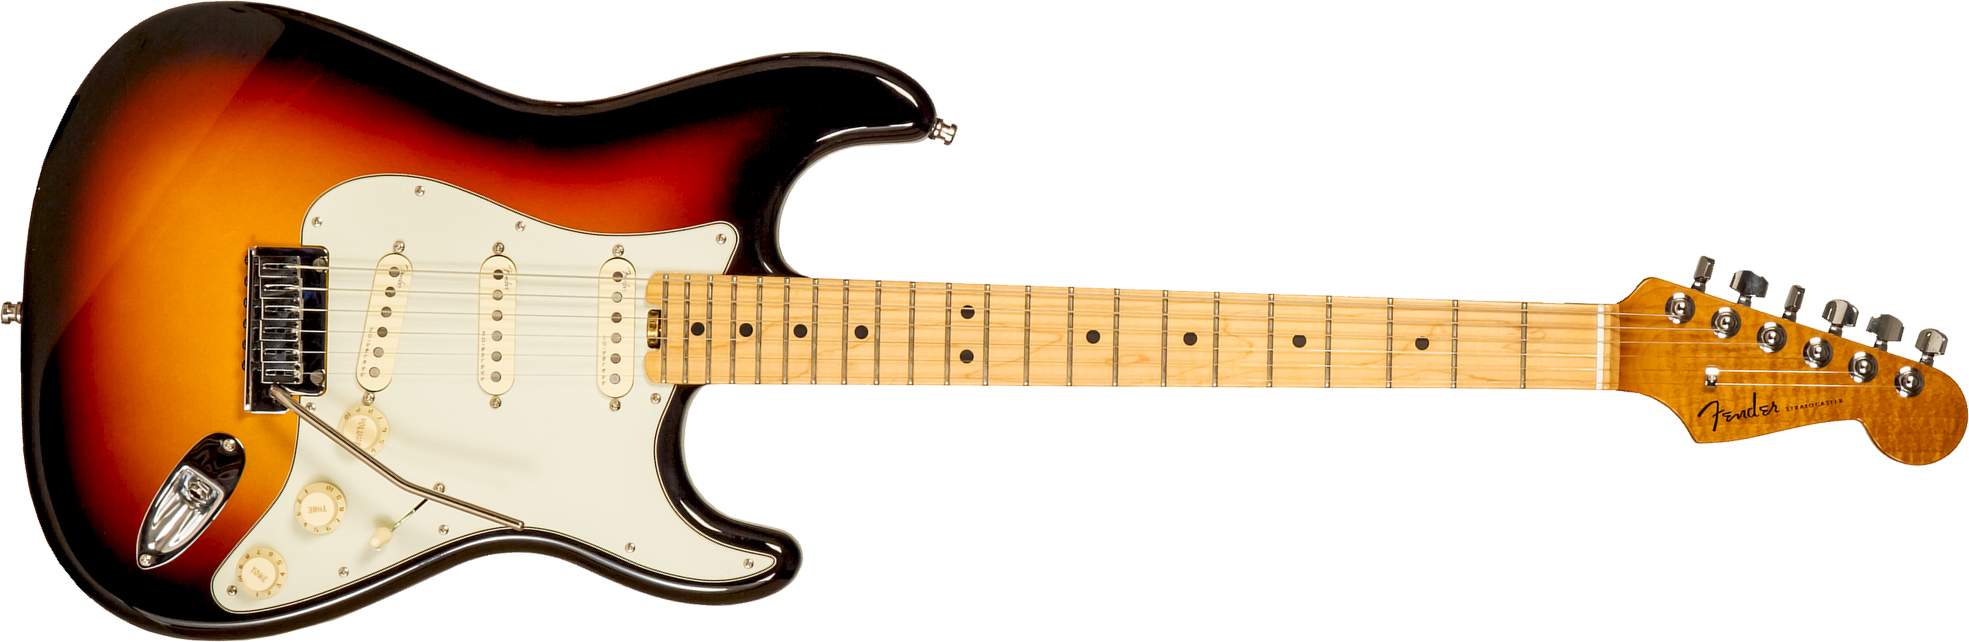 Fender Custom Shop Strat Elite 3s Trem Mn #xn15588 - Nos 3-color Sunburst - Elektrische gitaar in Str-vorm - Main picture